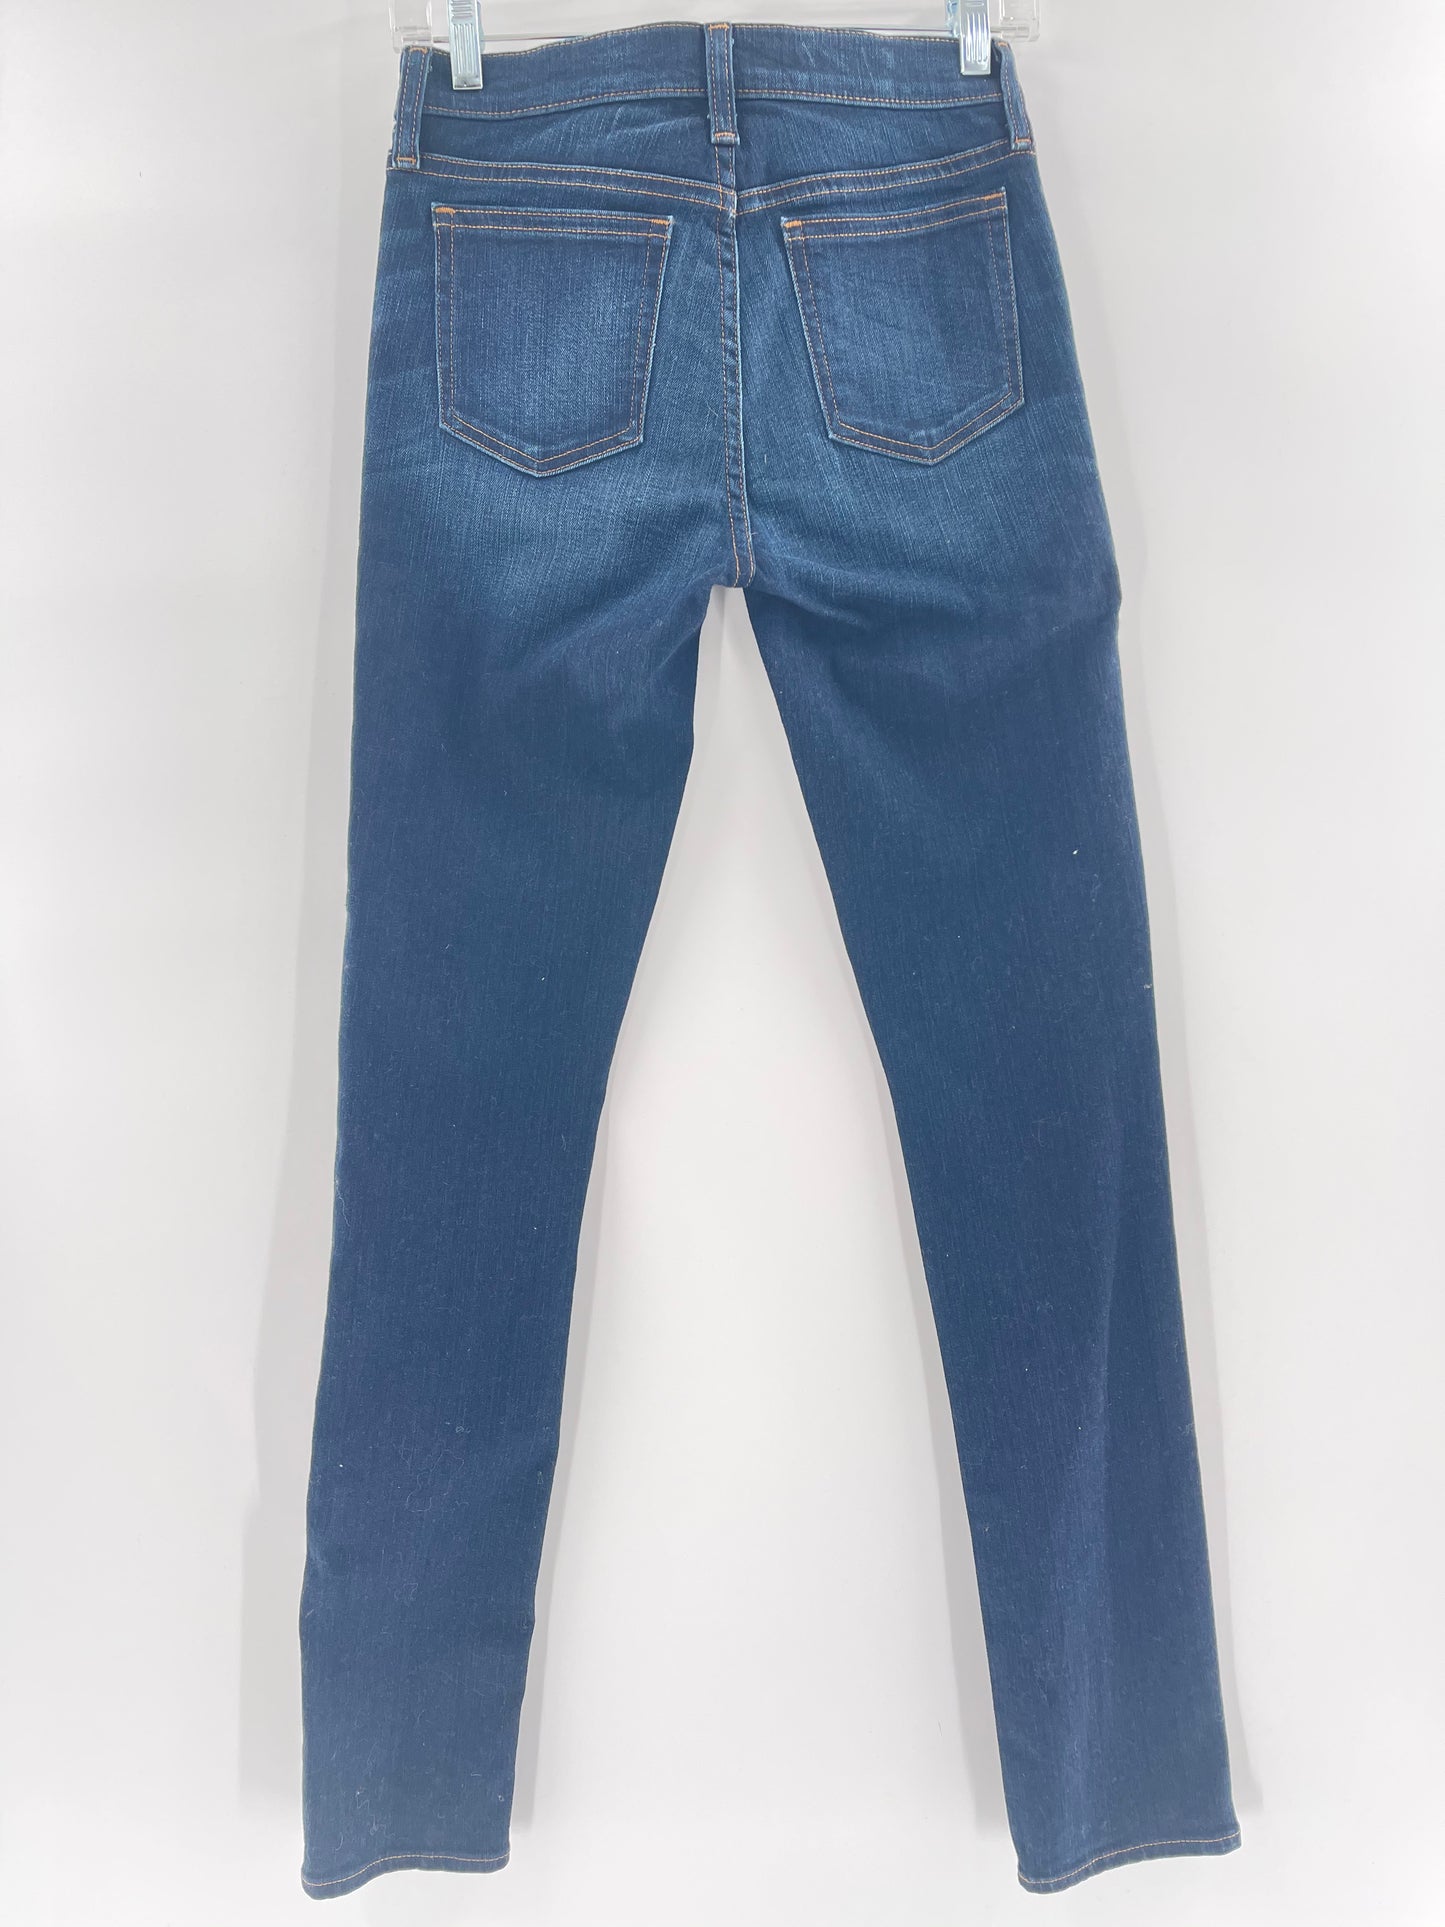 J Crew Reid Blue Jeans (Size 26)